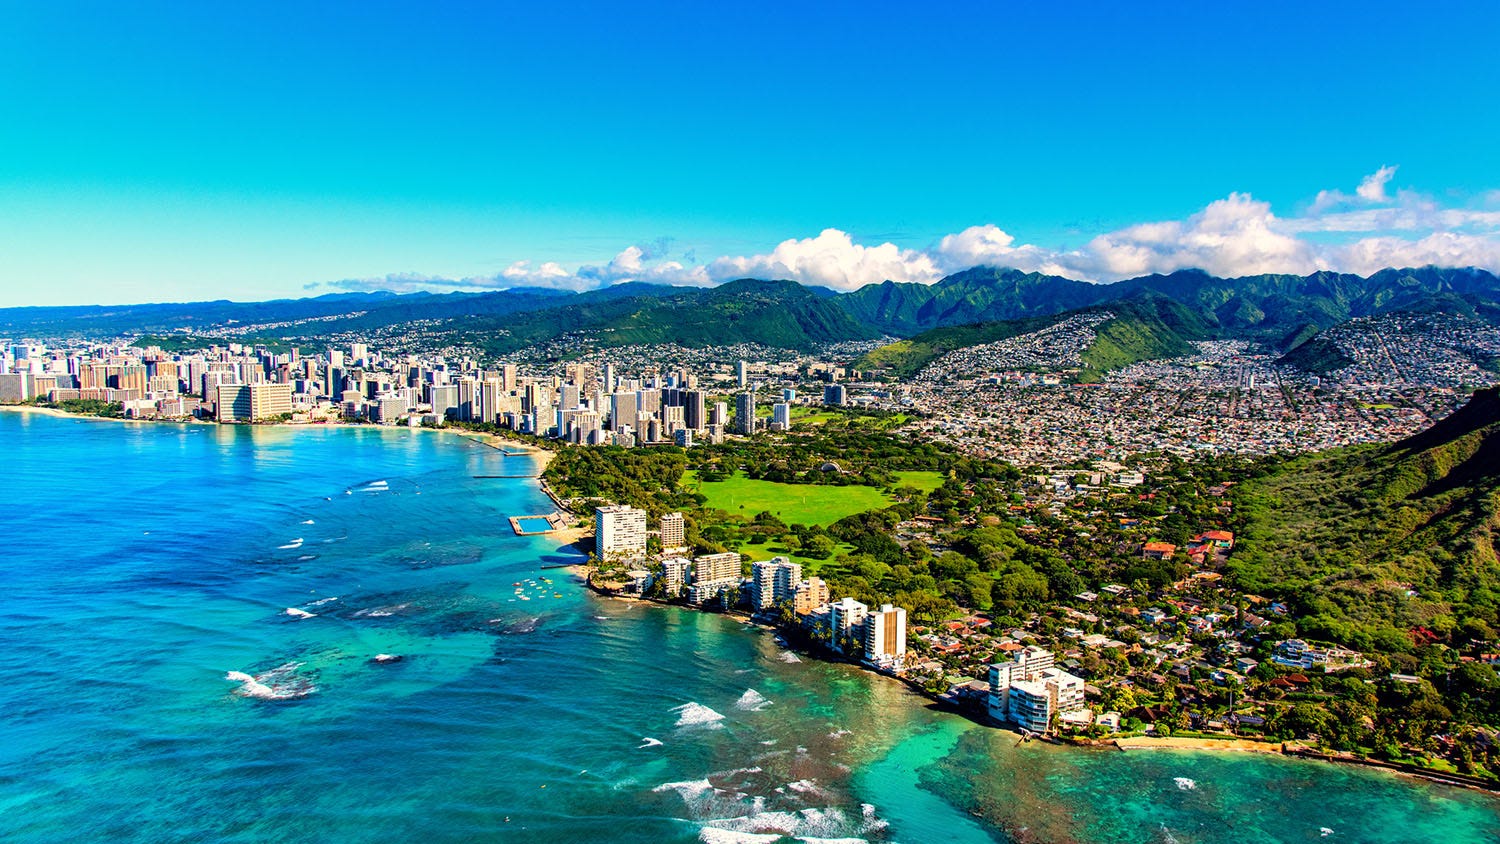 Hawaii gains tourism as coronavirus rules loosen